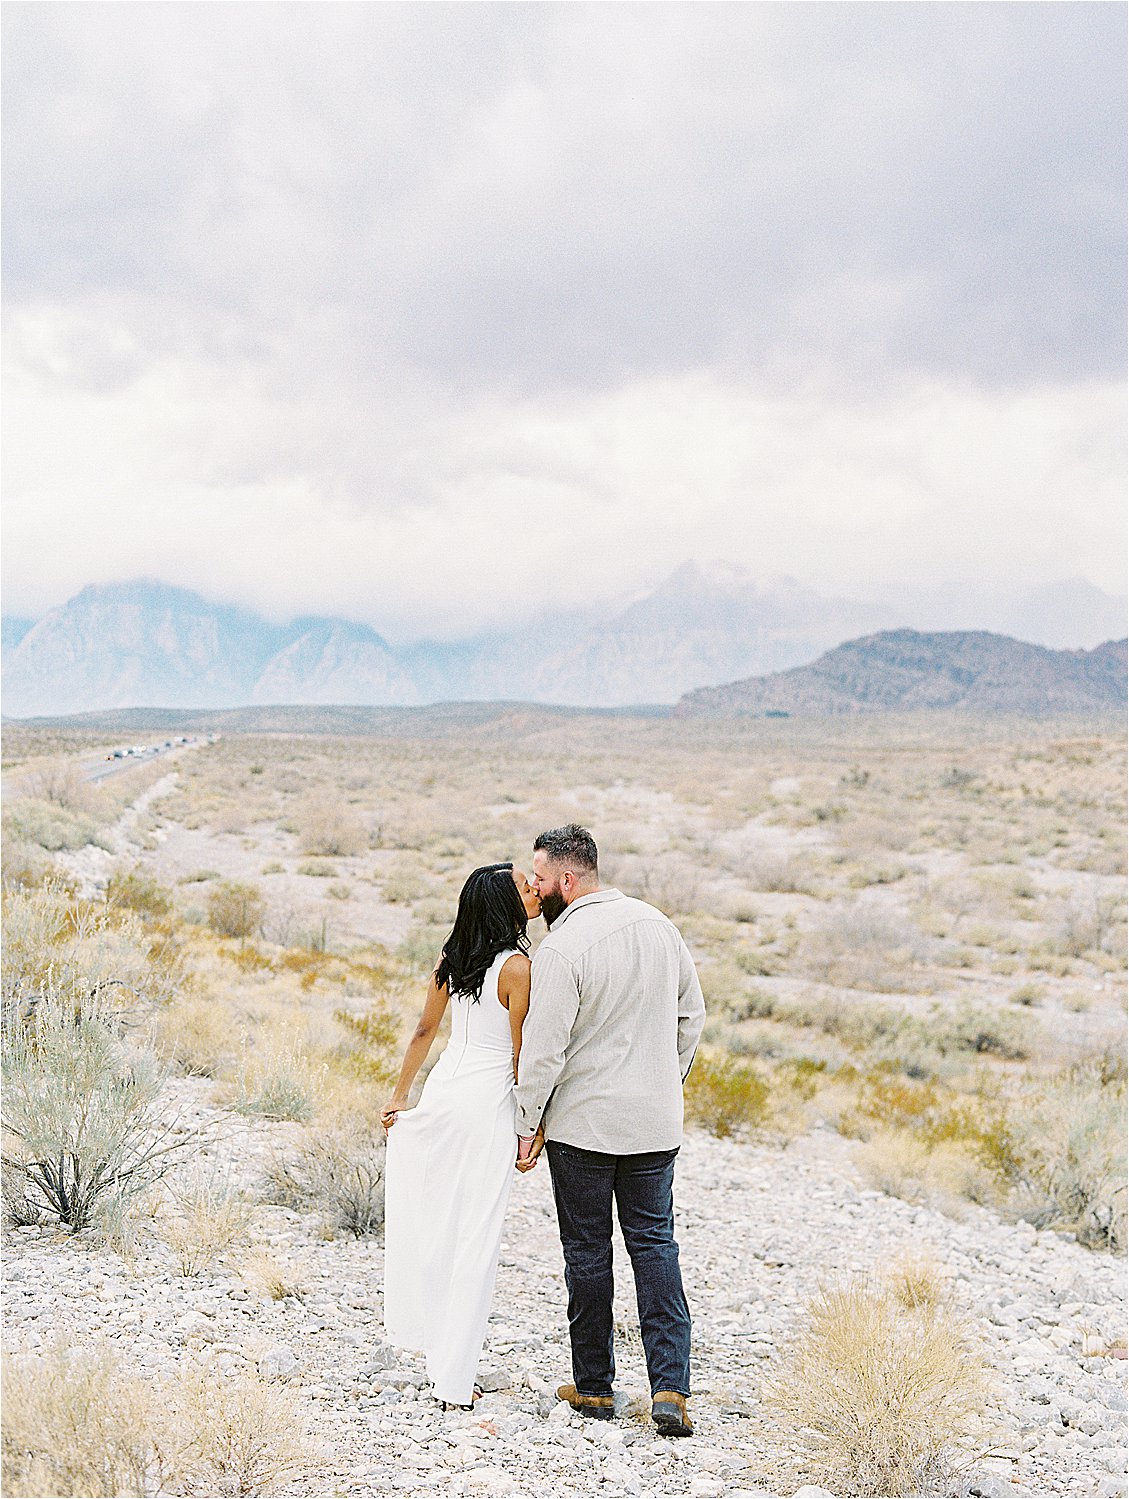 Red Rock Elopement in Las Vegas with Destination Film Wedding Photographer, Renee Hollingshead